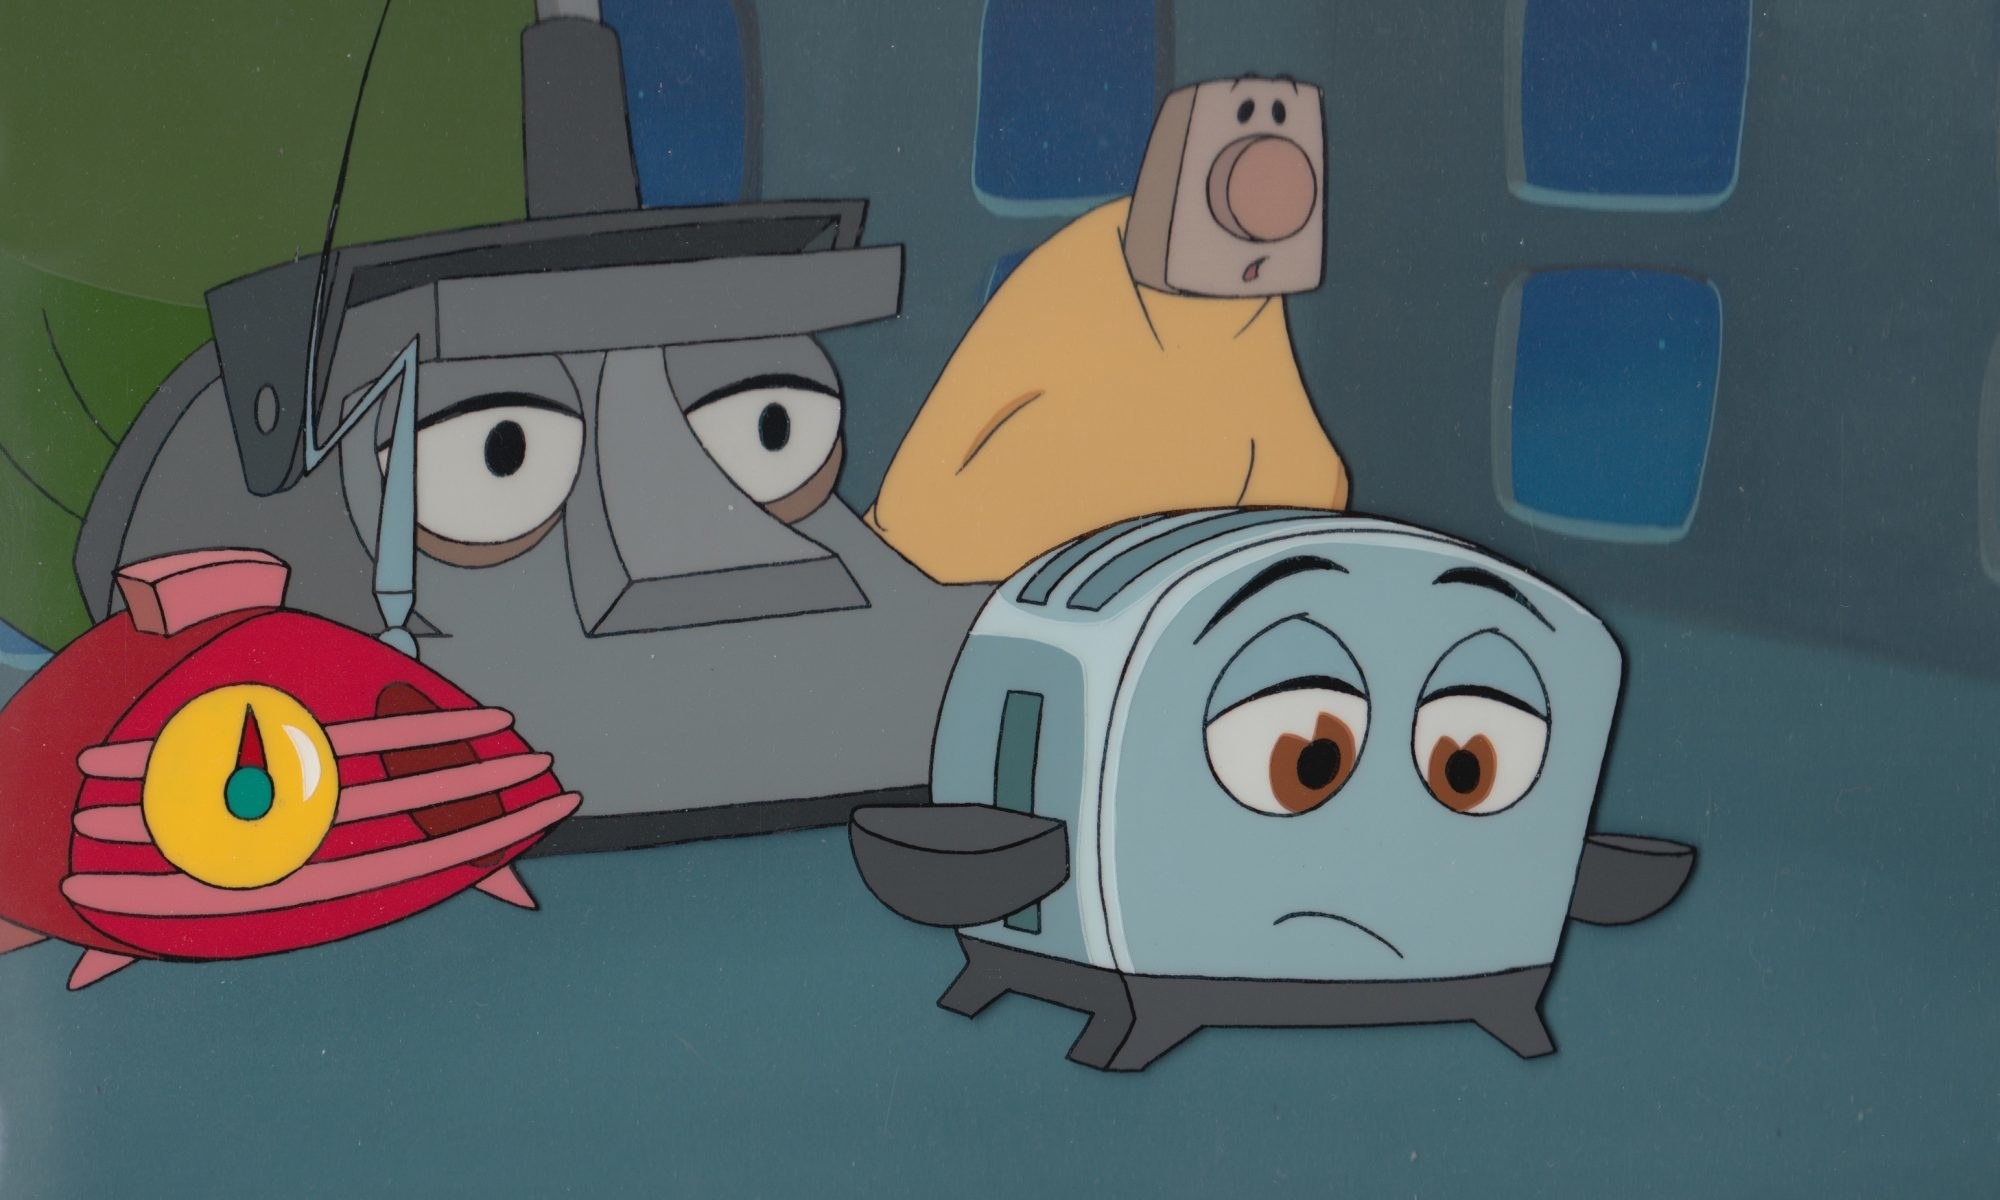 Toaster, Blankey, Radio, and Kirby looking sad